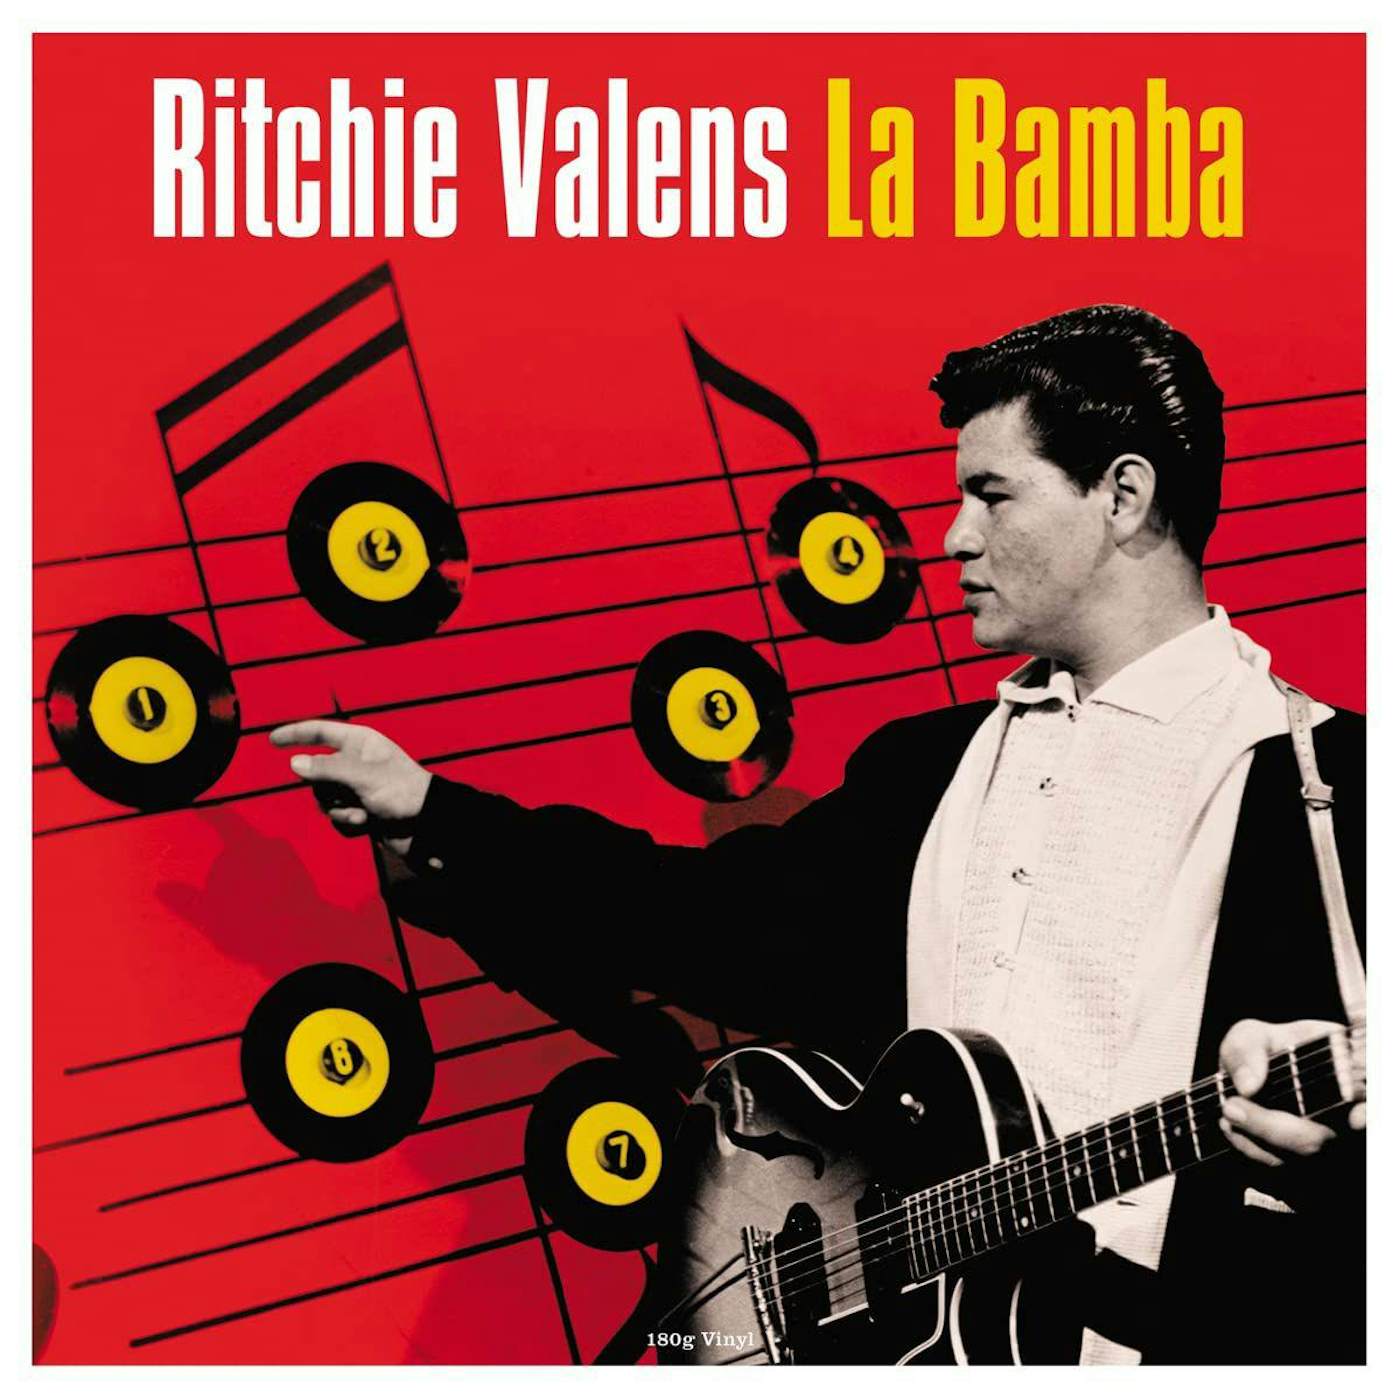 Ritchie Valens La Bamba (180G) Vinyl Record